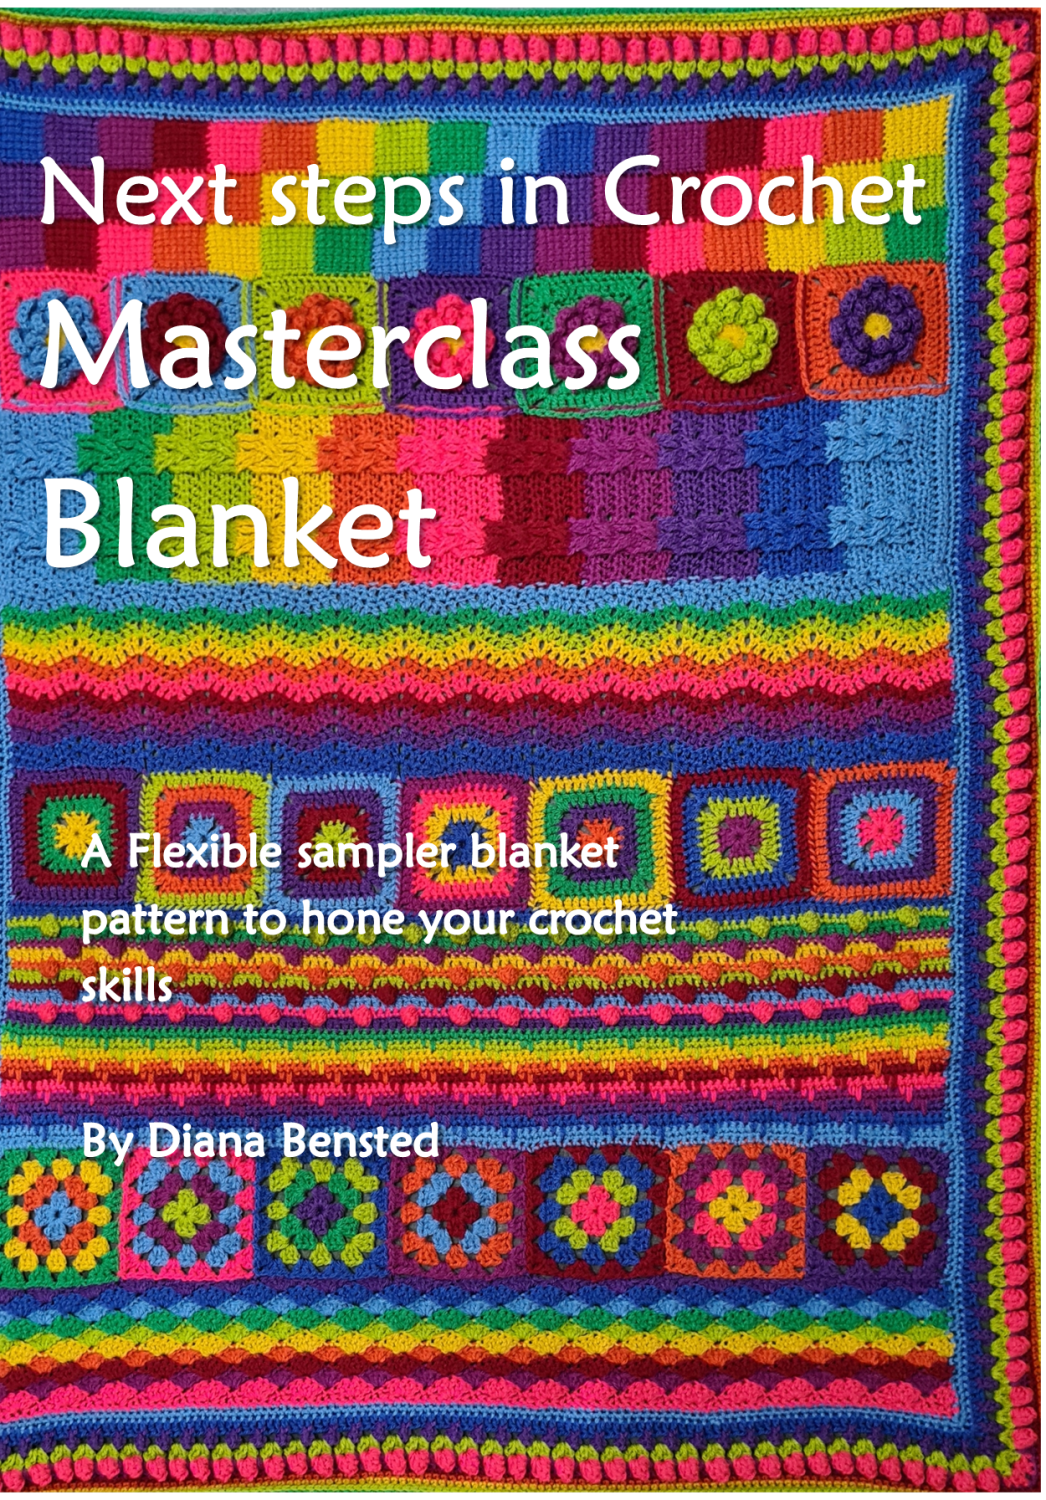 Next steps in Crochet: Masterclass Blanket